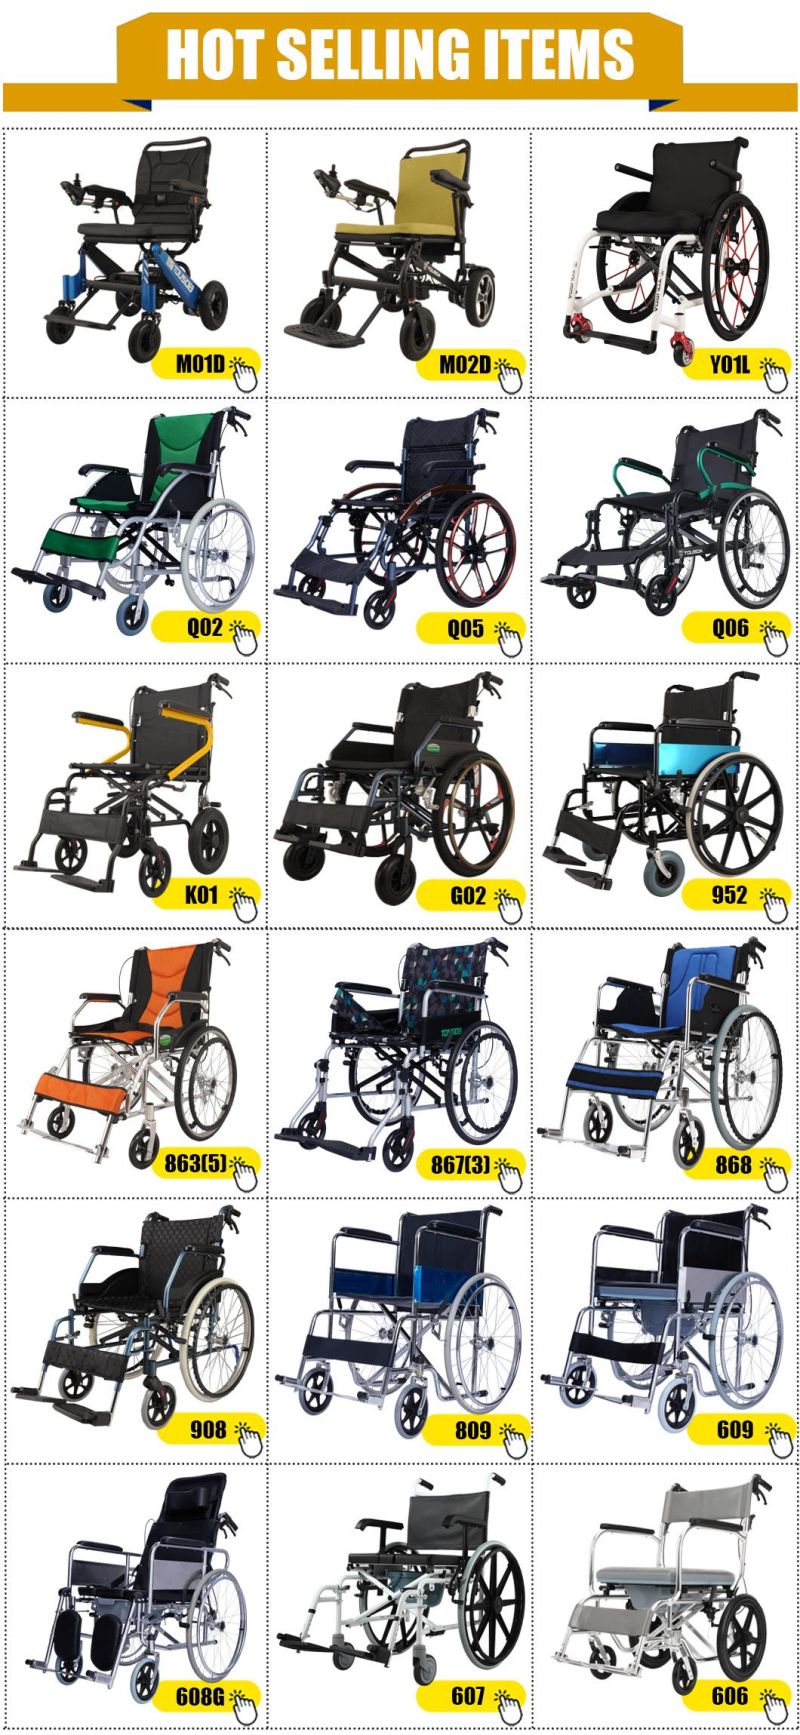 Standing Aluminum Frame Folding Bariatric Transport Disabled Power Wheelchair